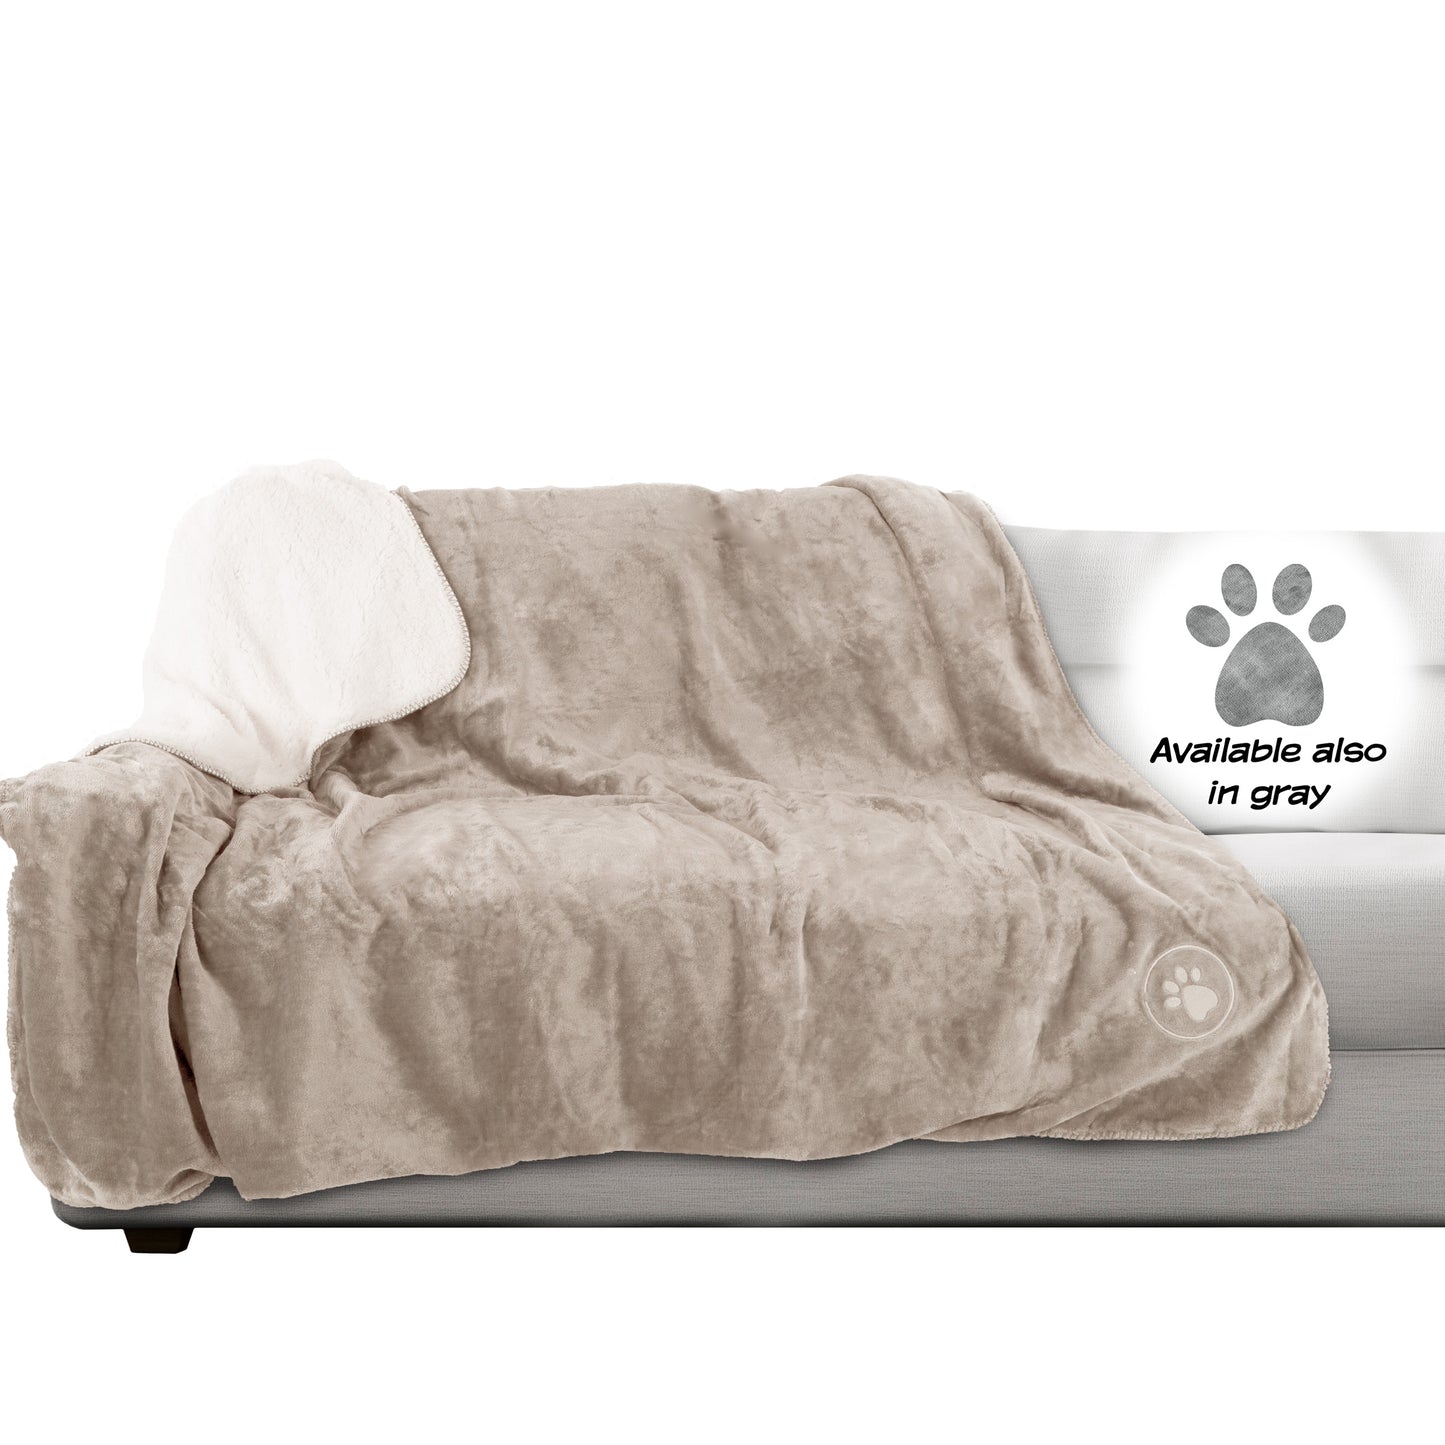 PETMAKER 60x70-Inch Waterproof Dog Blanket, Tan